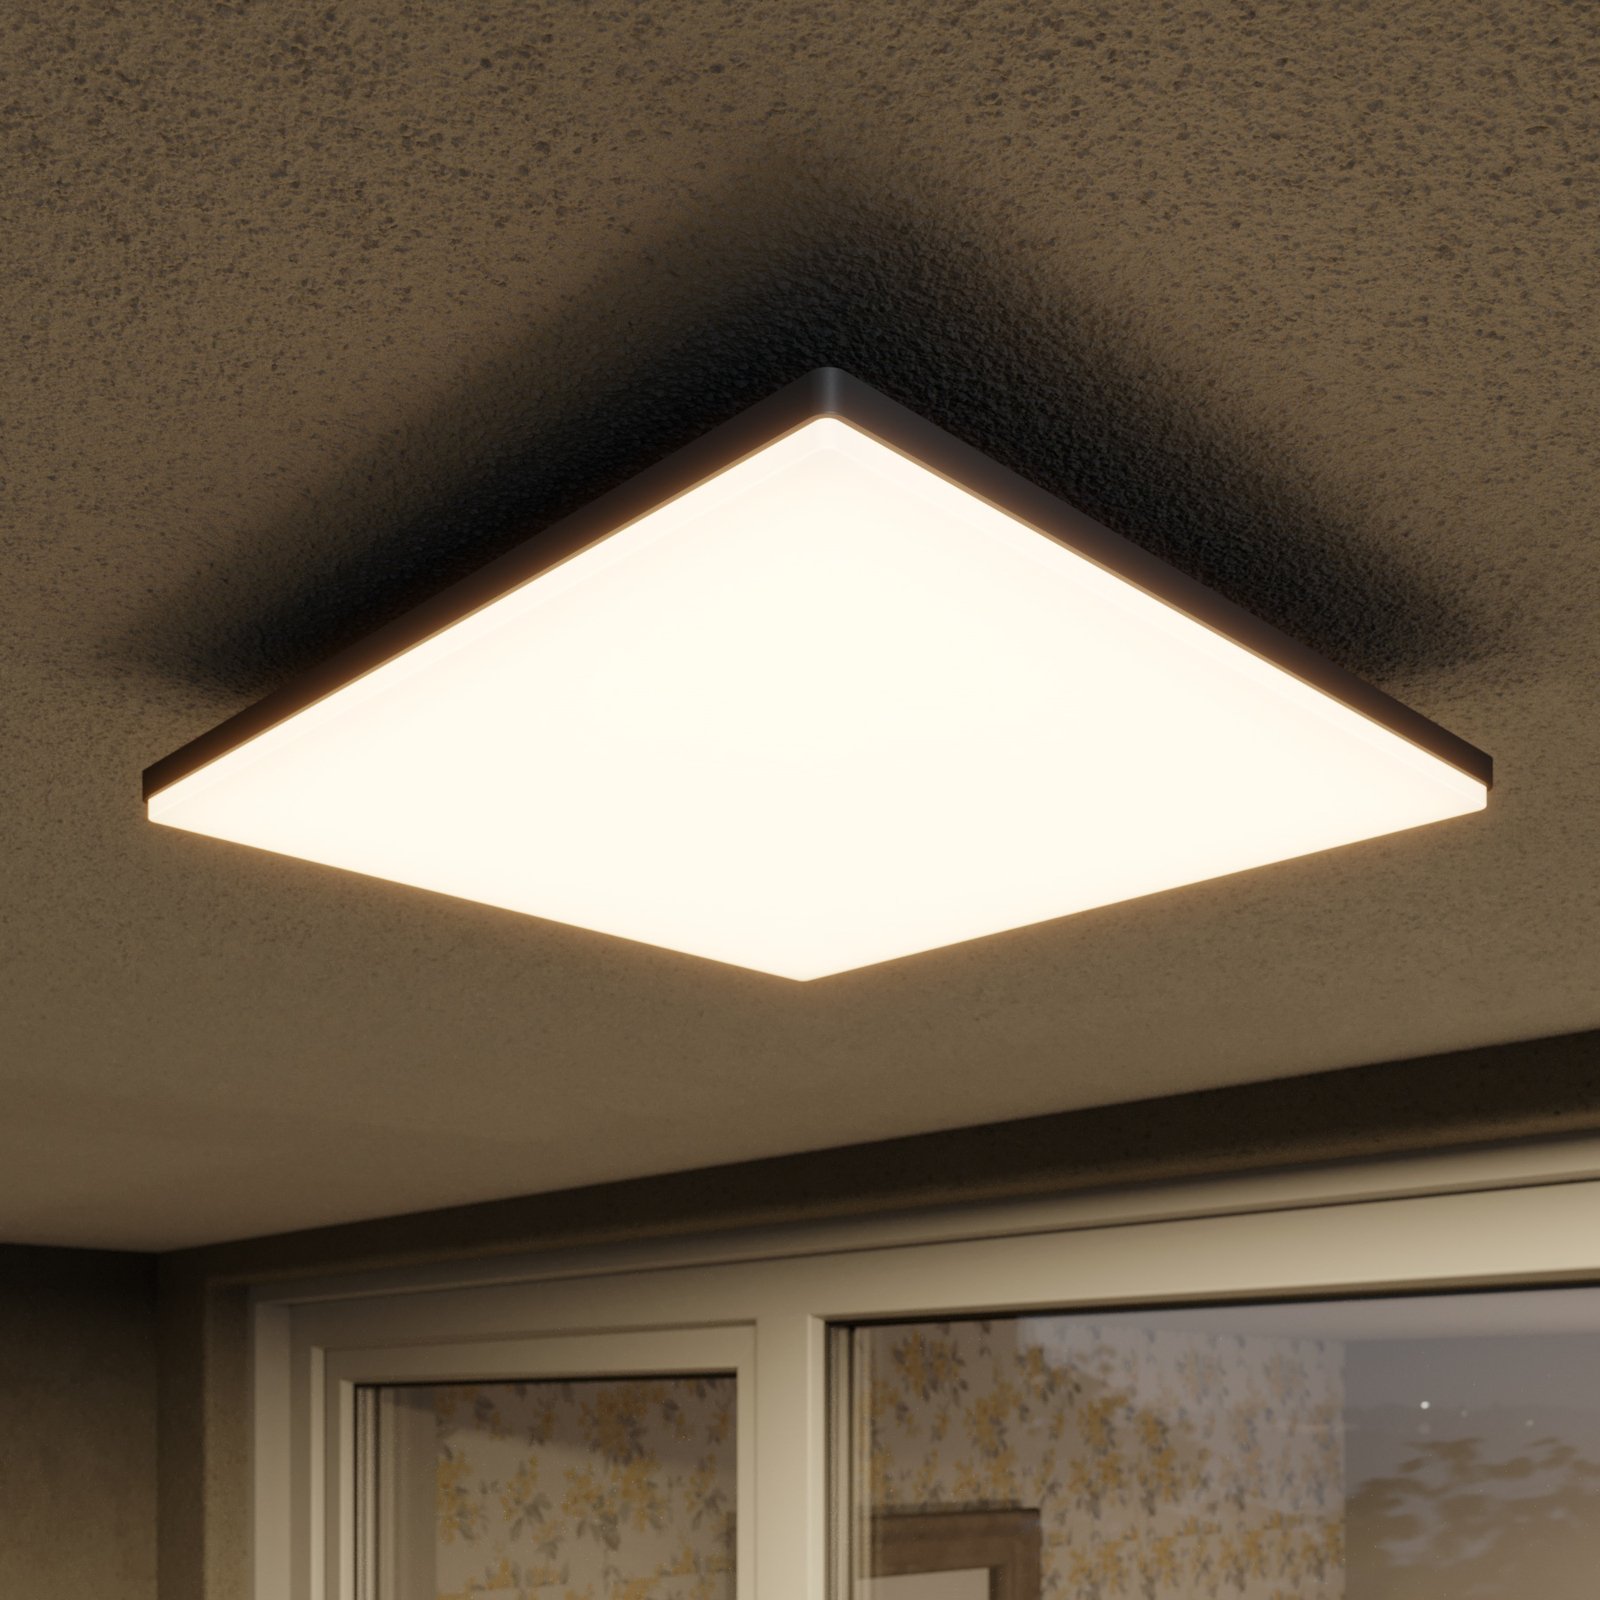 Kwadratowa lampa sufitowa zewnętrzna LED Henni